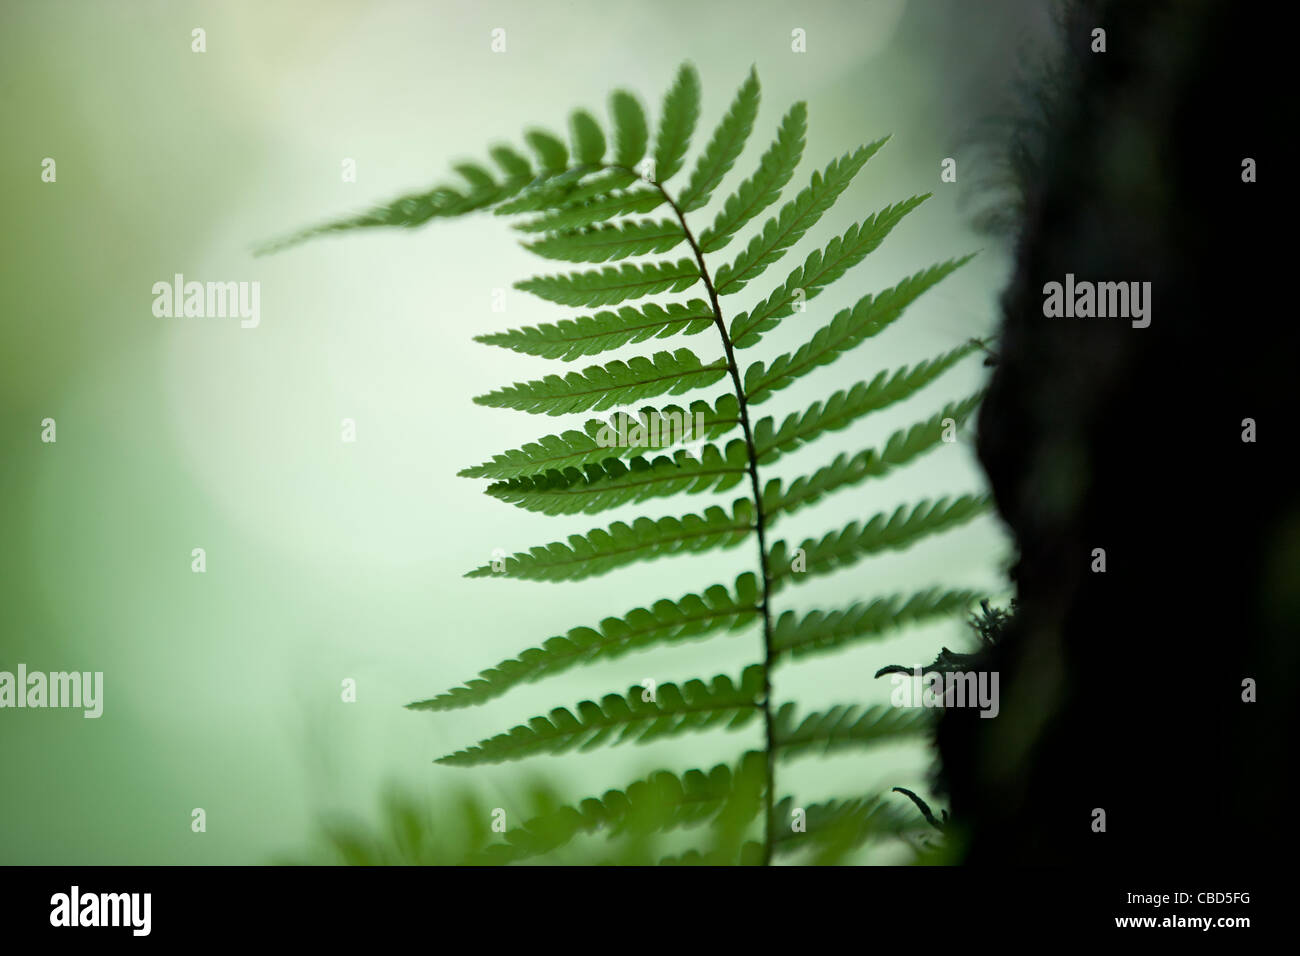 Fern tree leaves Stock Photo - Alamy